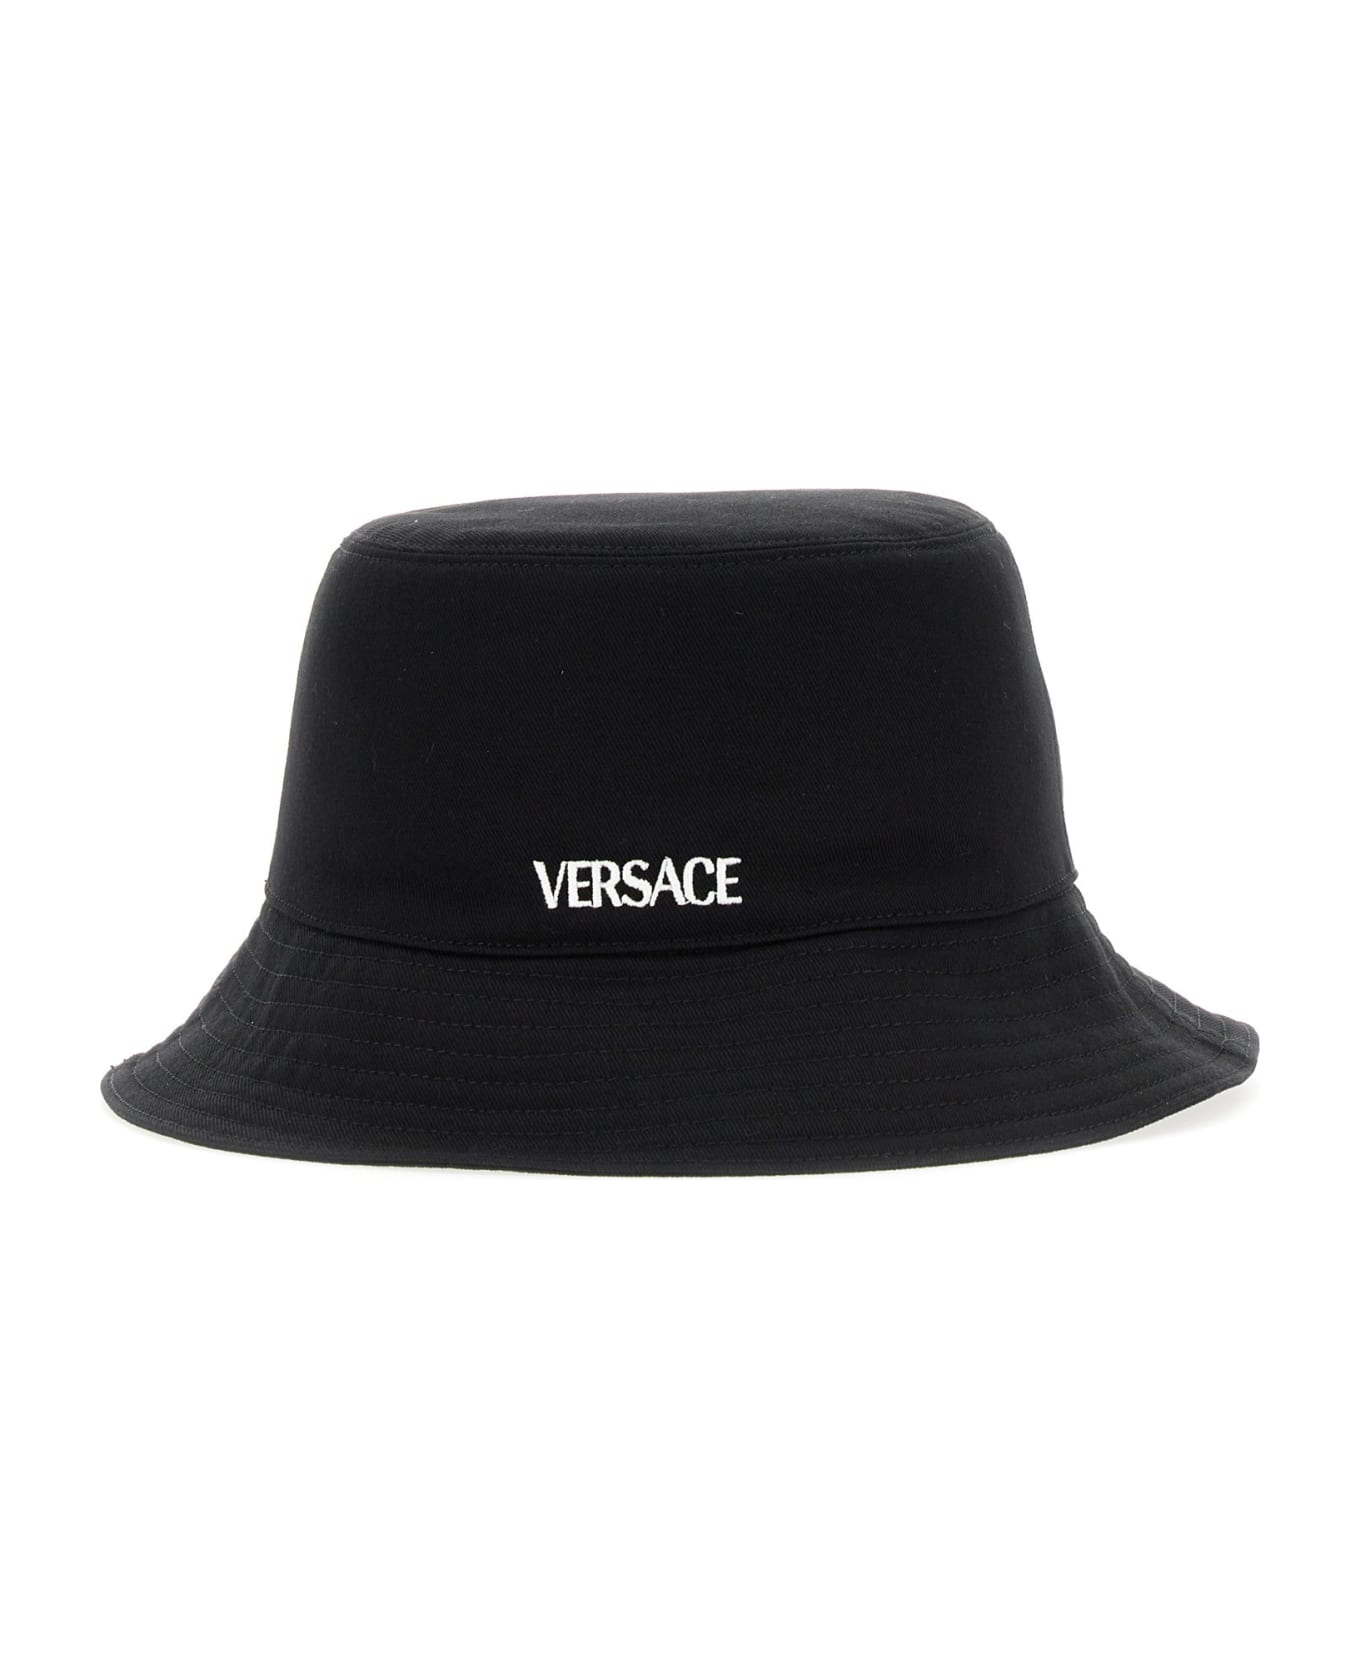 Versace Fisherman Hat "i   You But..." - NERO